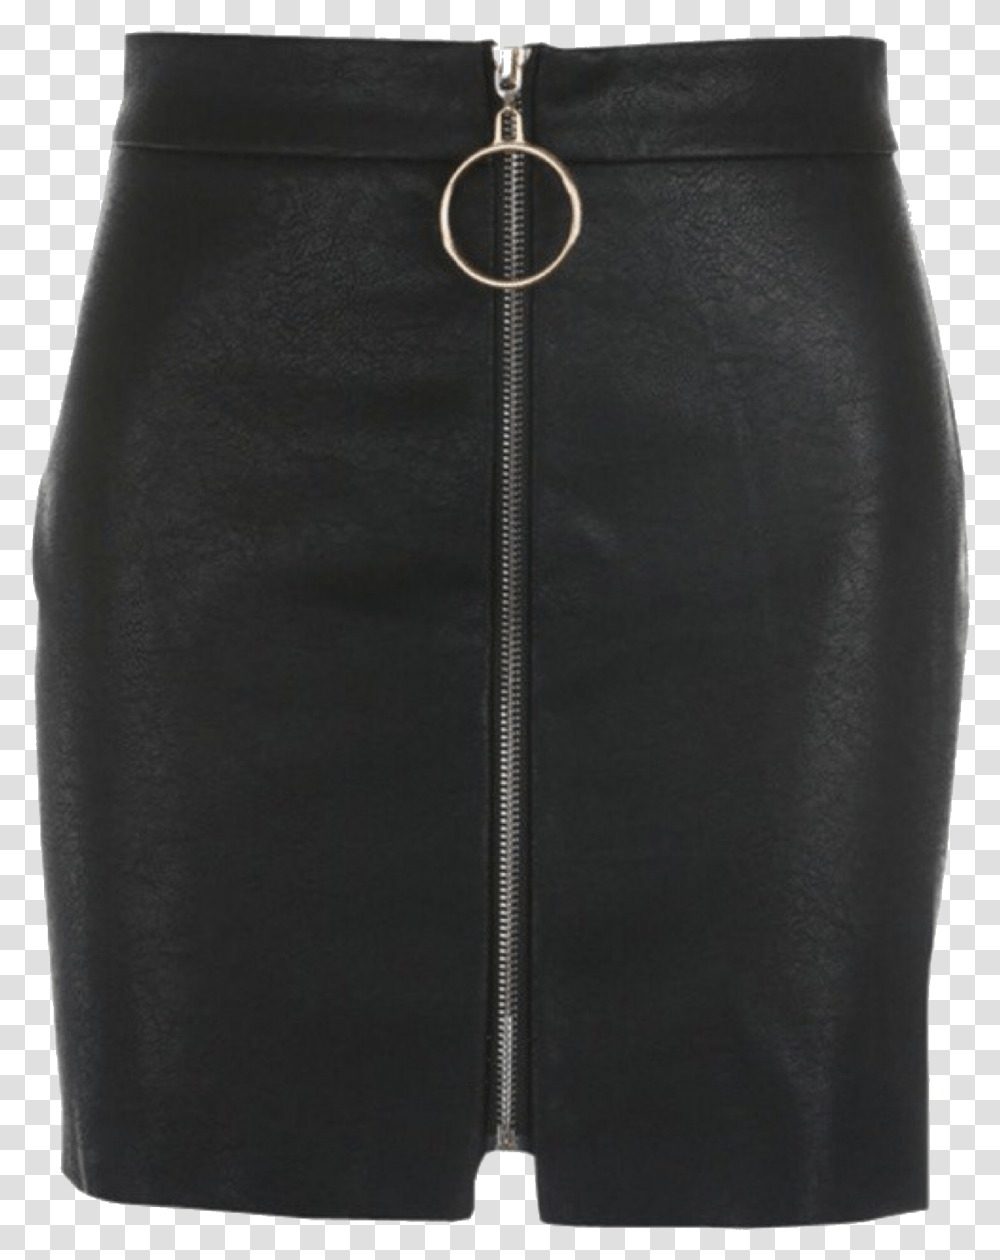 Black Leather Skirt Polyvore, Apparel, Hip, Zipper Transparent Png